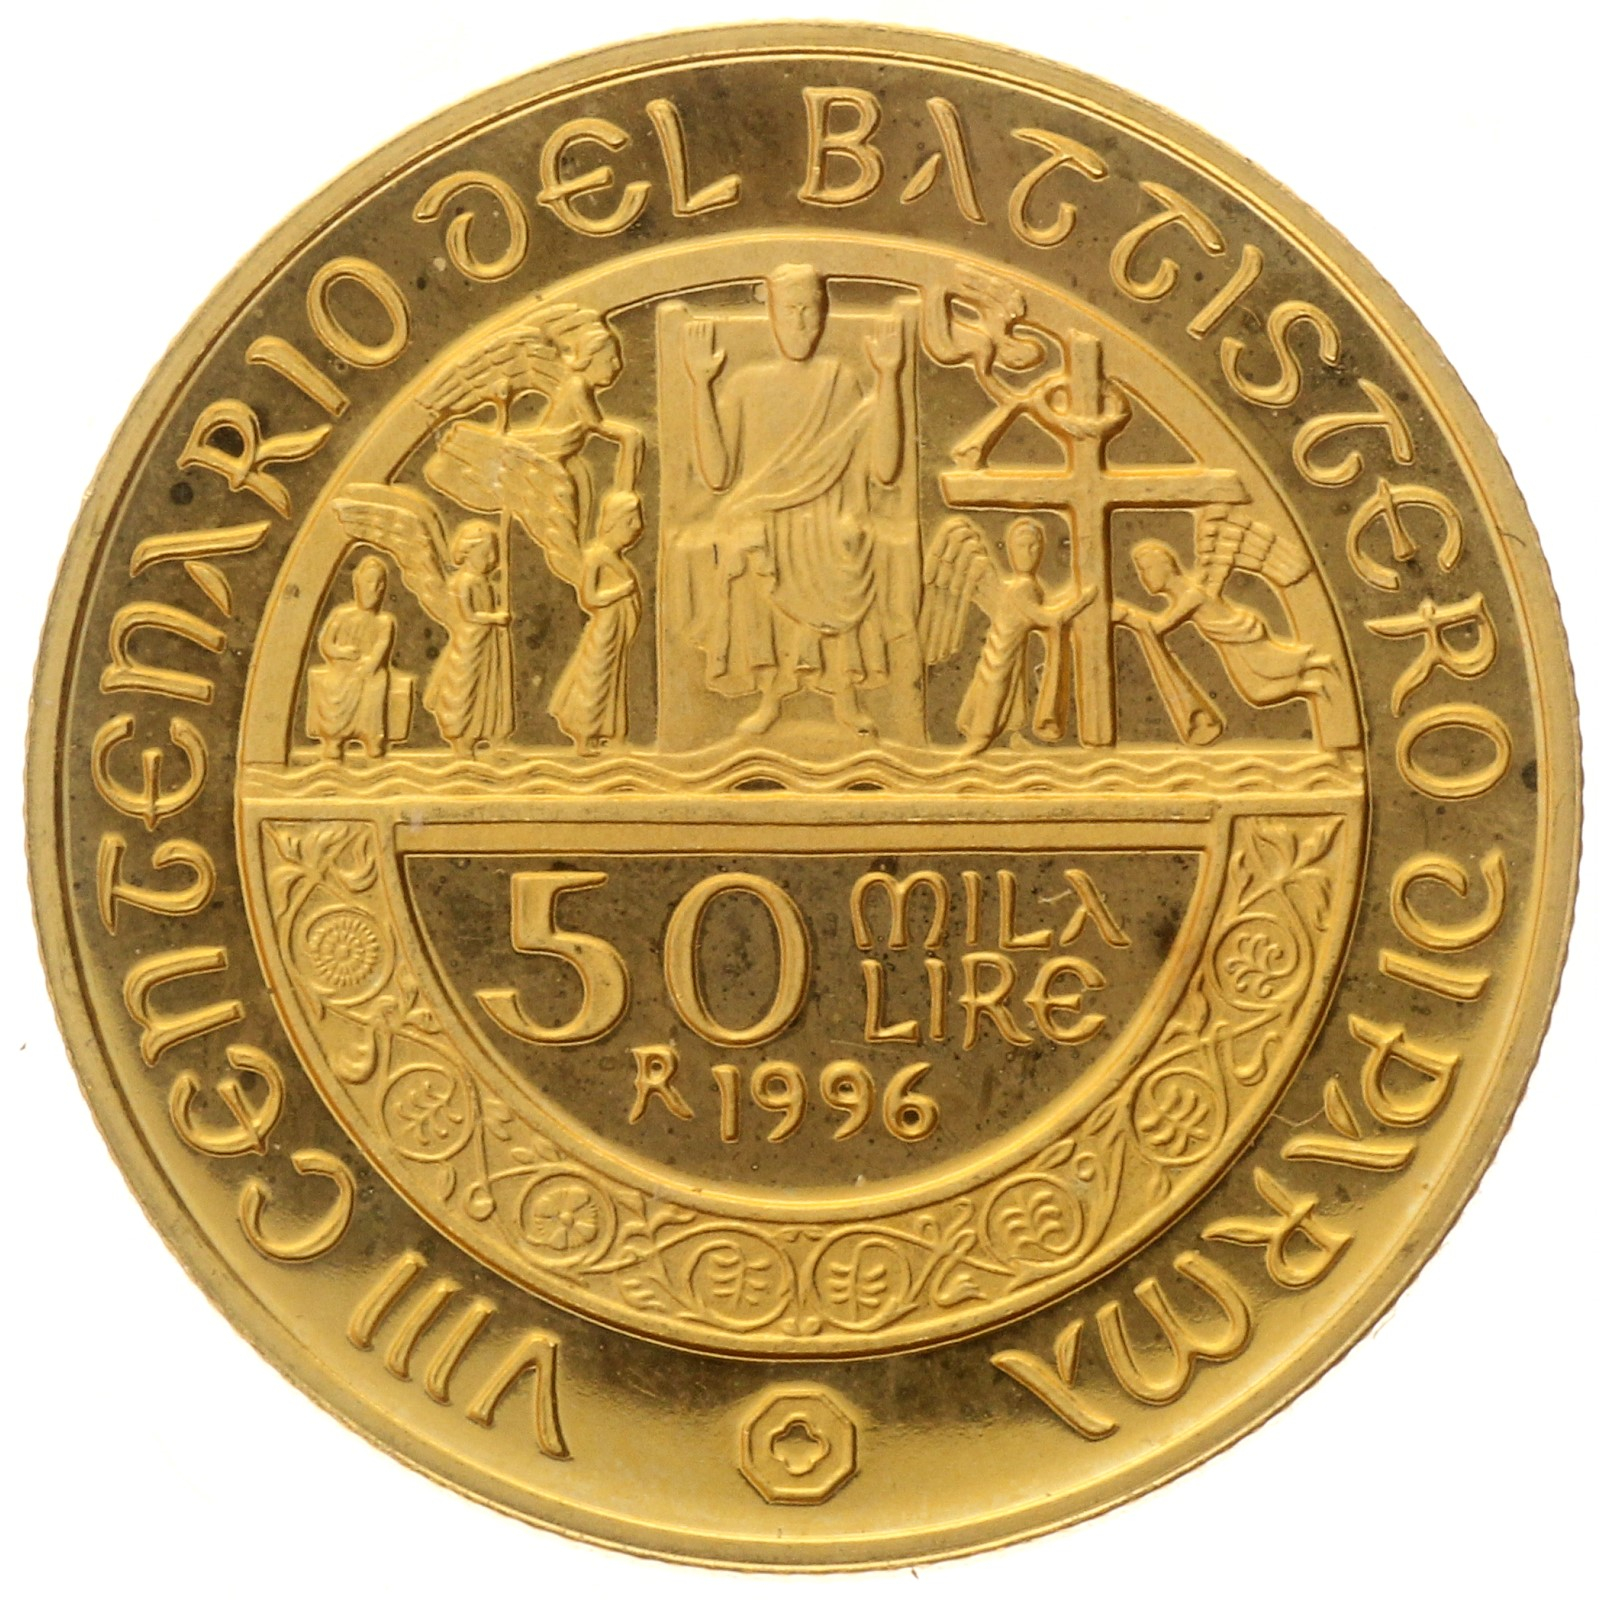 Italy - 50 000 lire - 1996 - Battistero of Parma